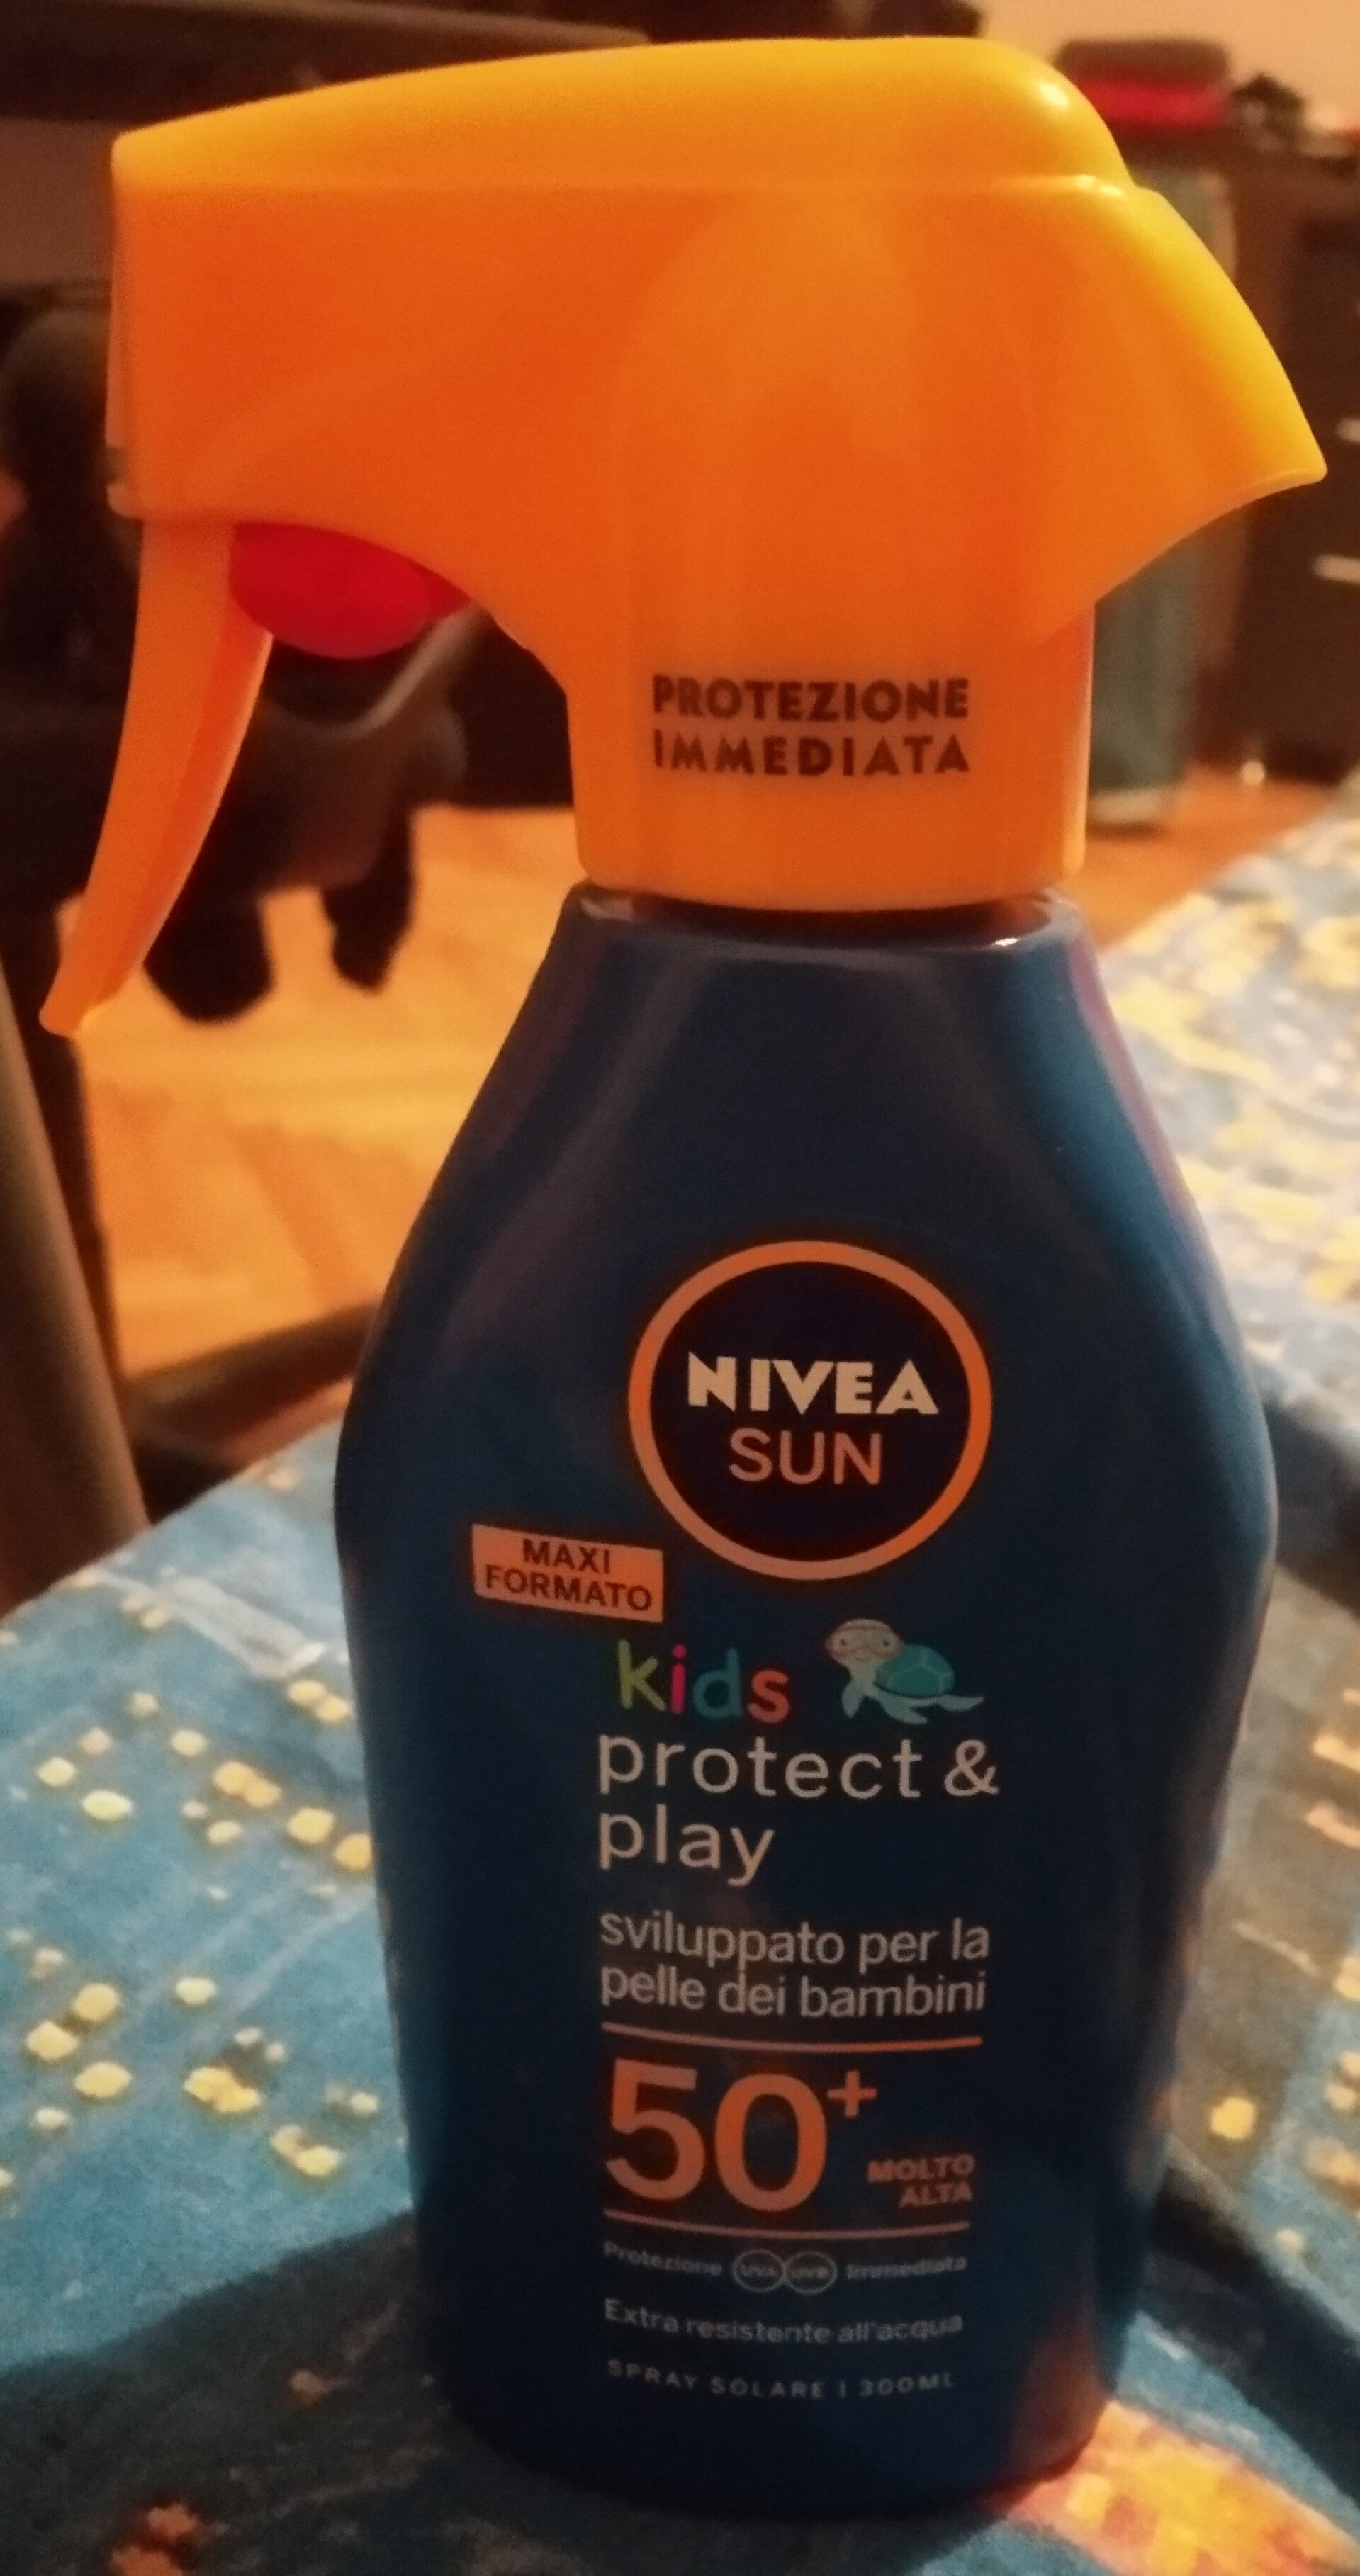 Nivea sun kids protect & play 50+ - Produto - it